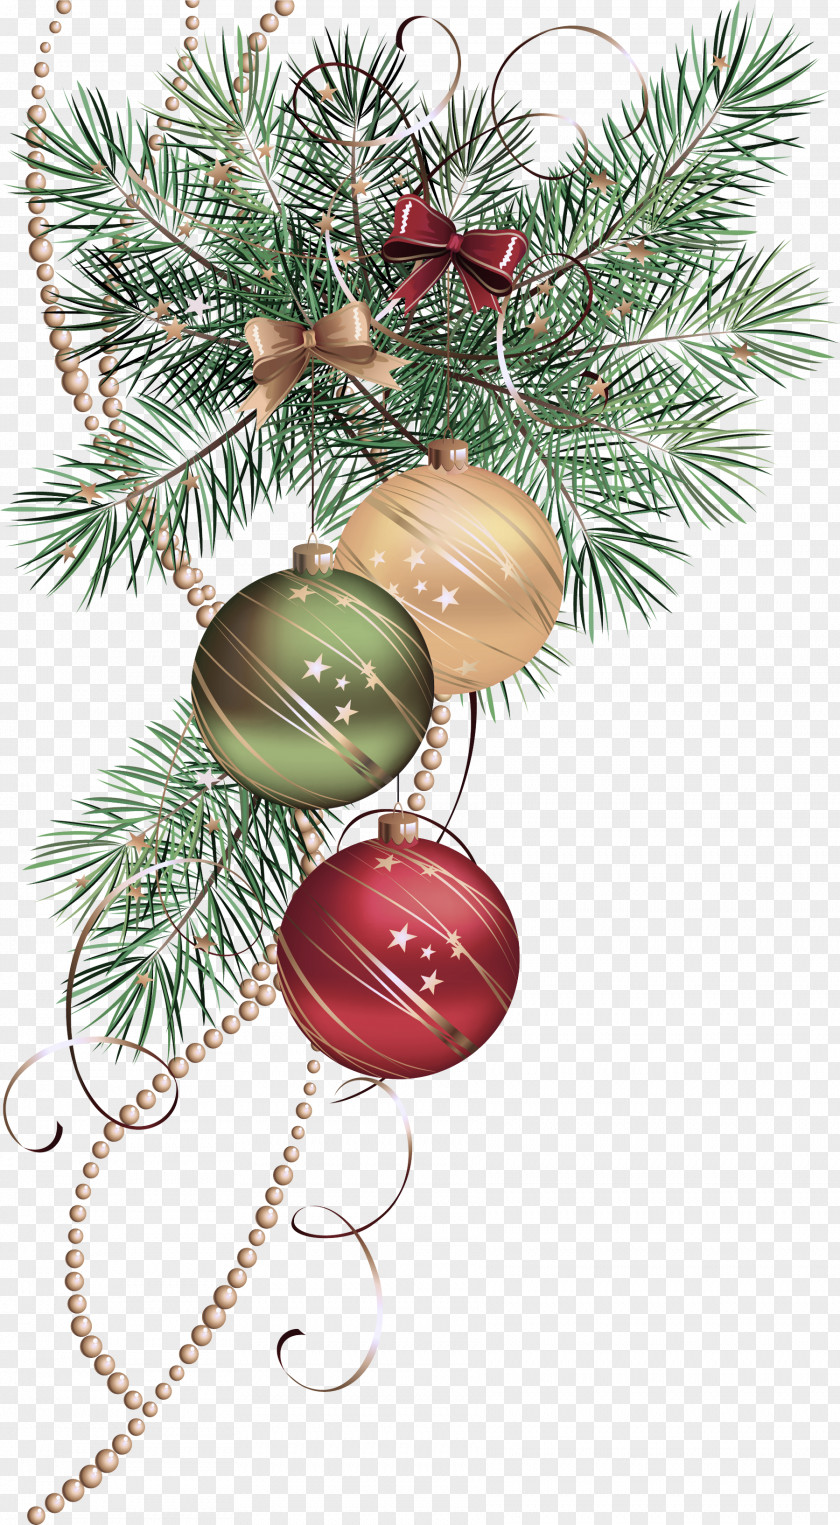 Pine Christmas Ornament PNG